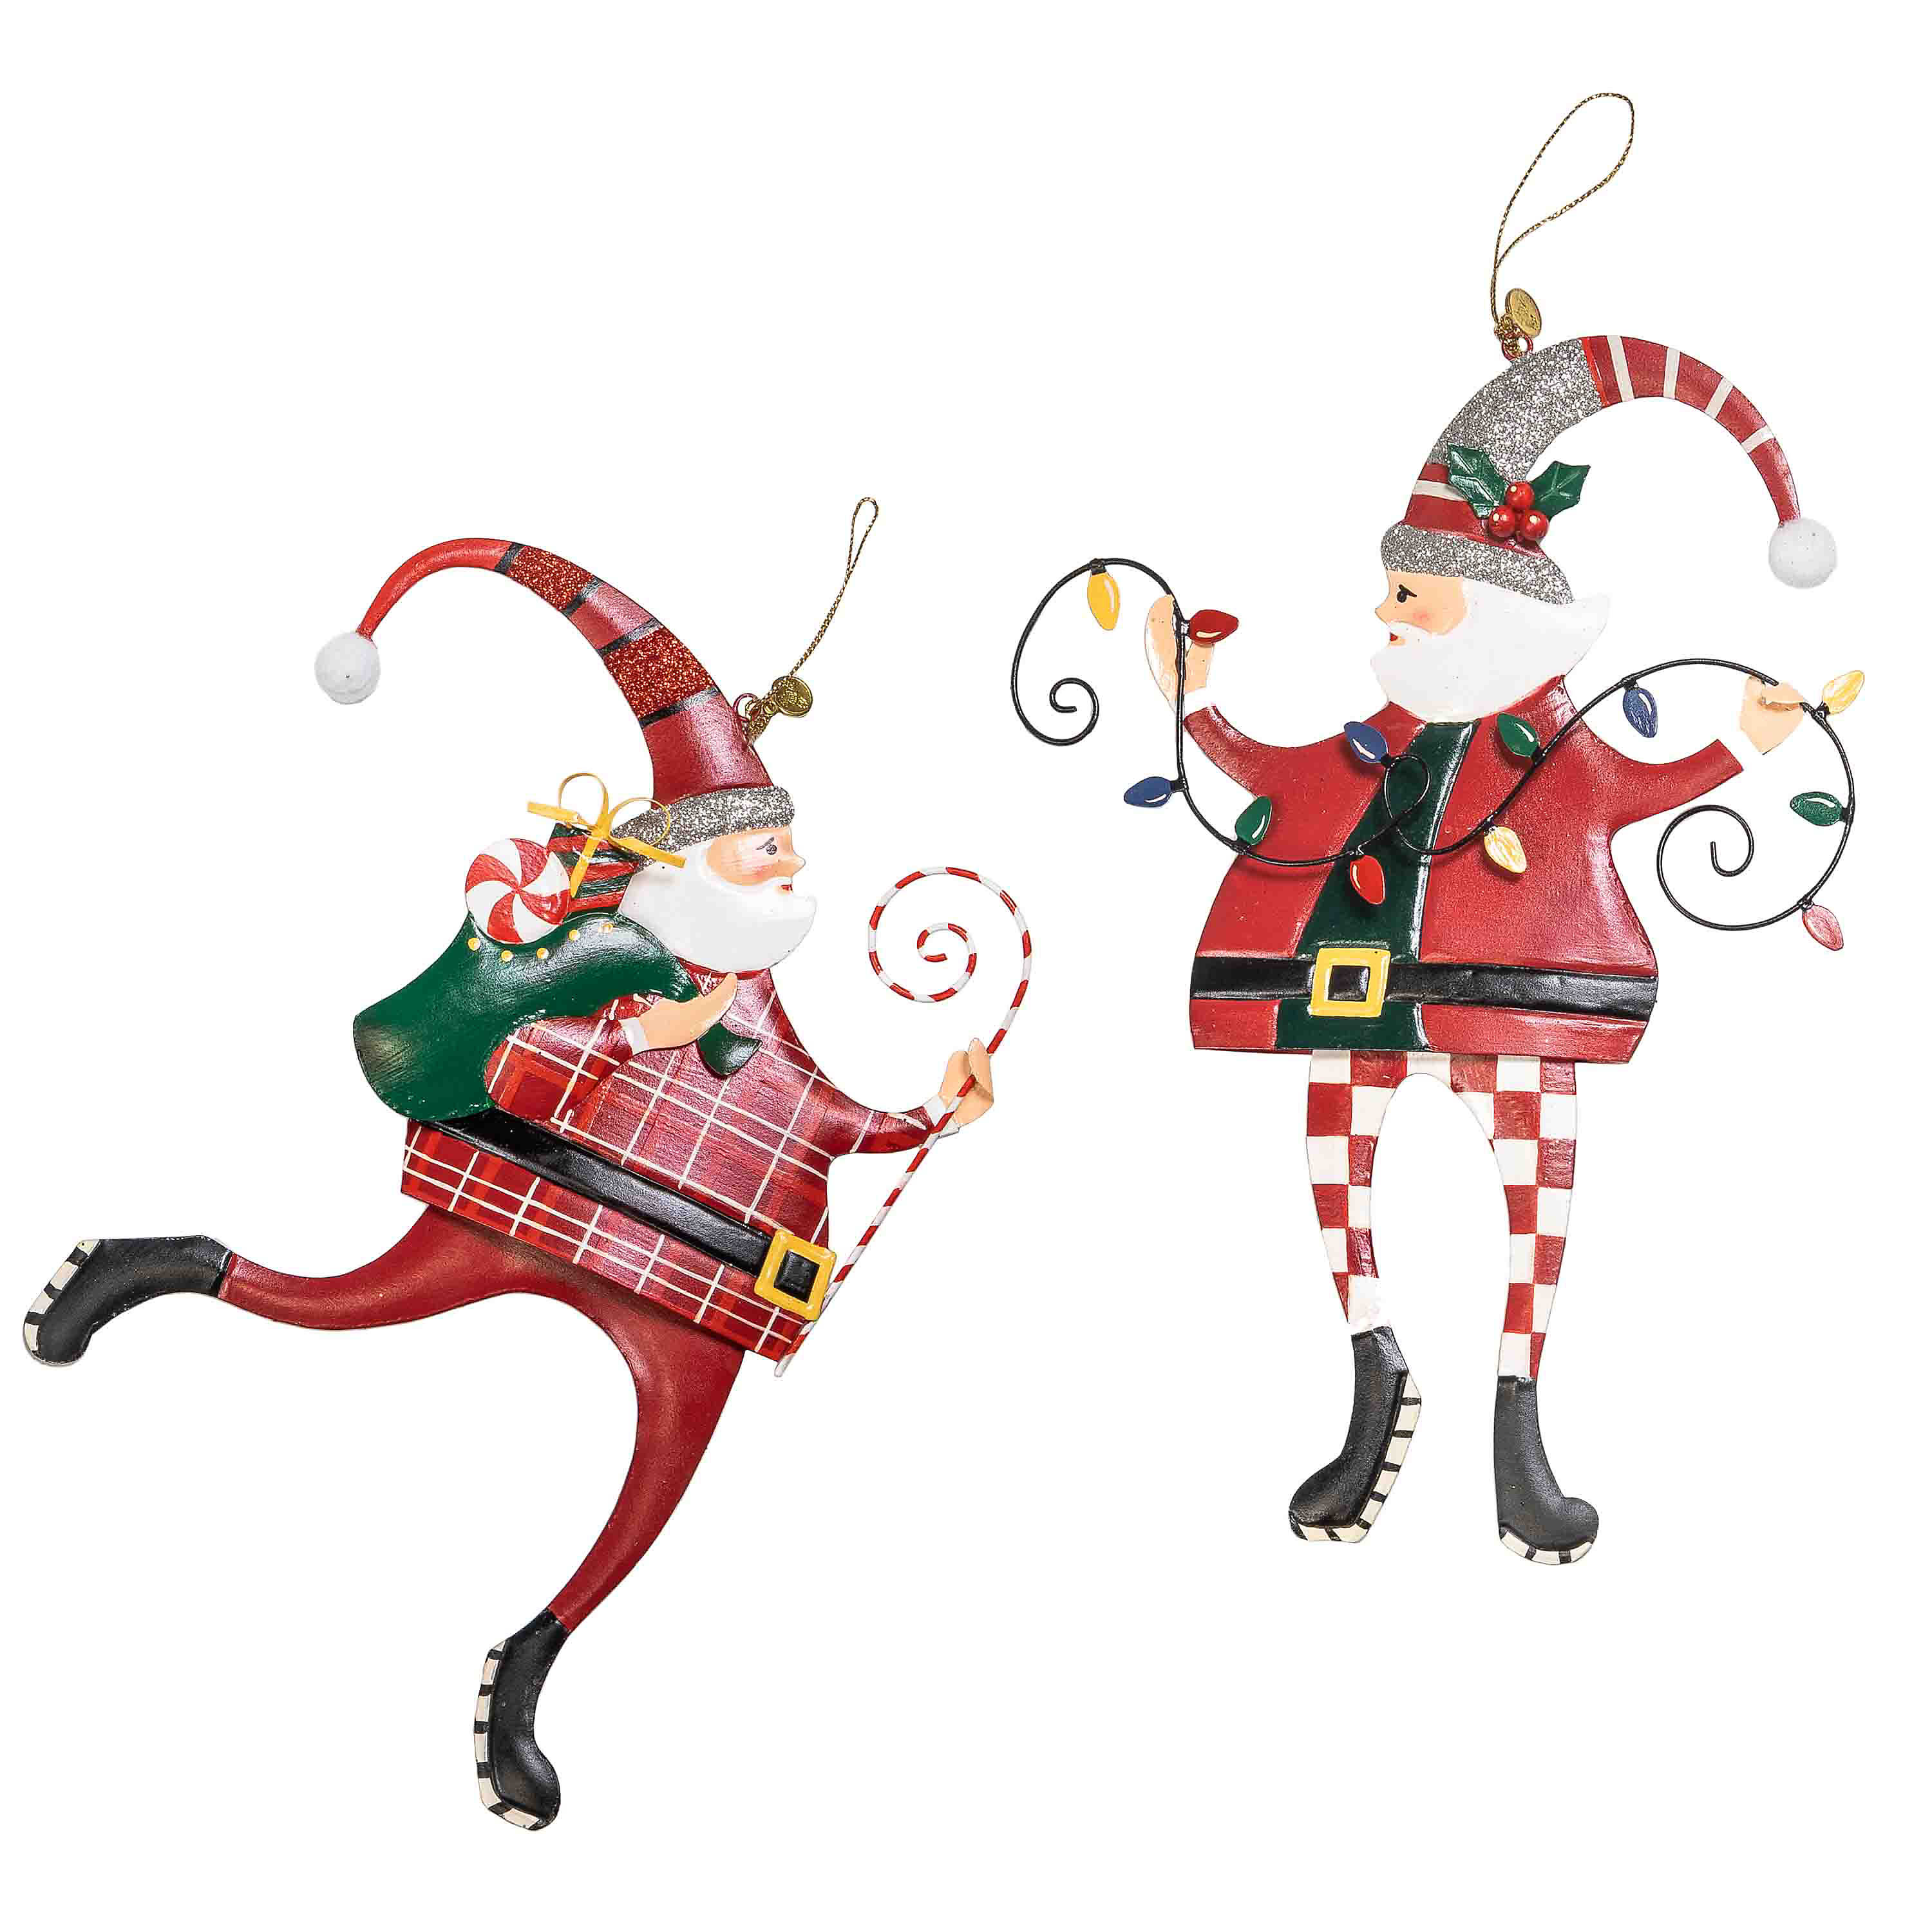 Trim A Tree Santa Ornaments, Set of 2 mackenzie-childs Panama 0